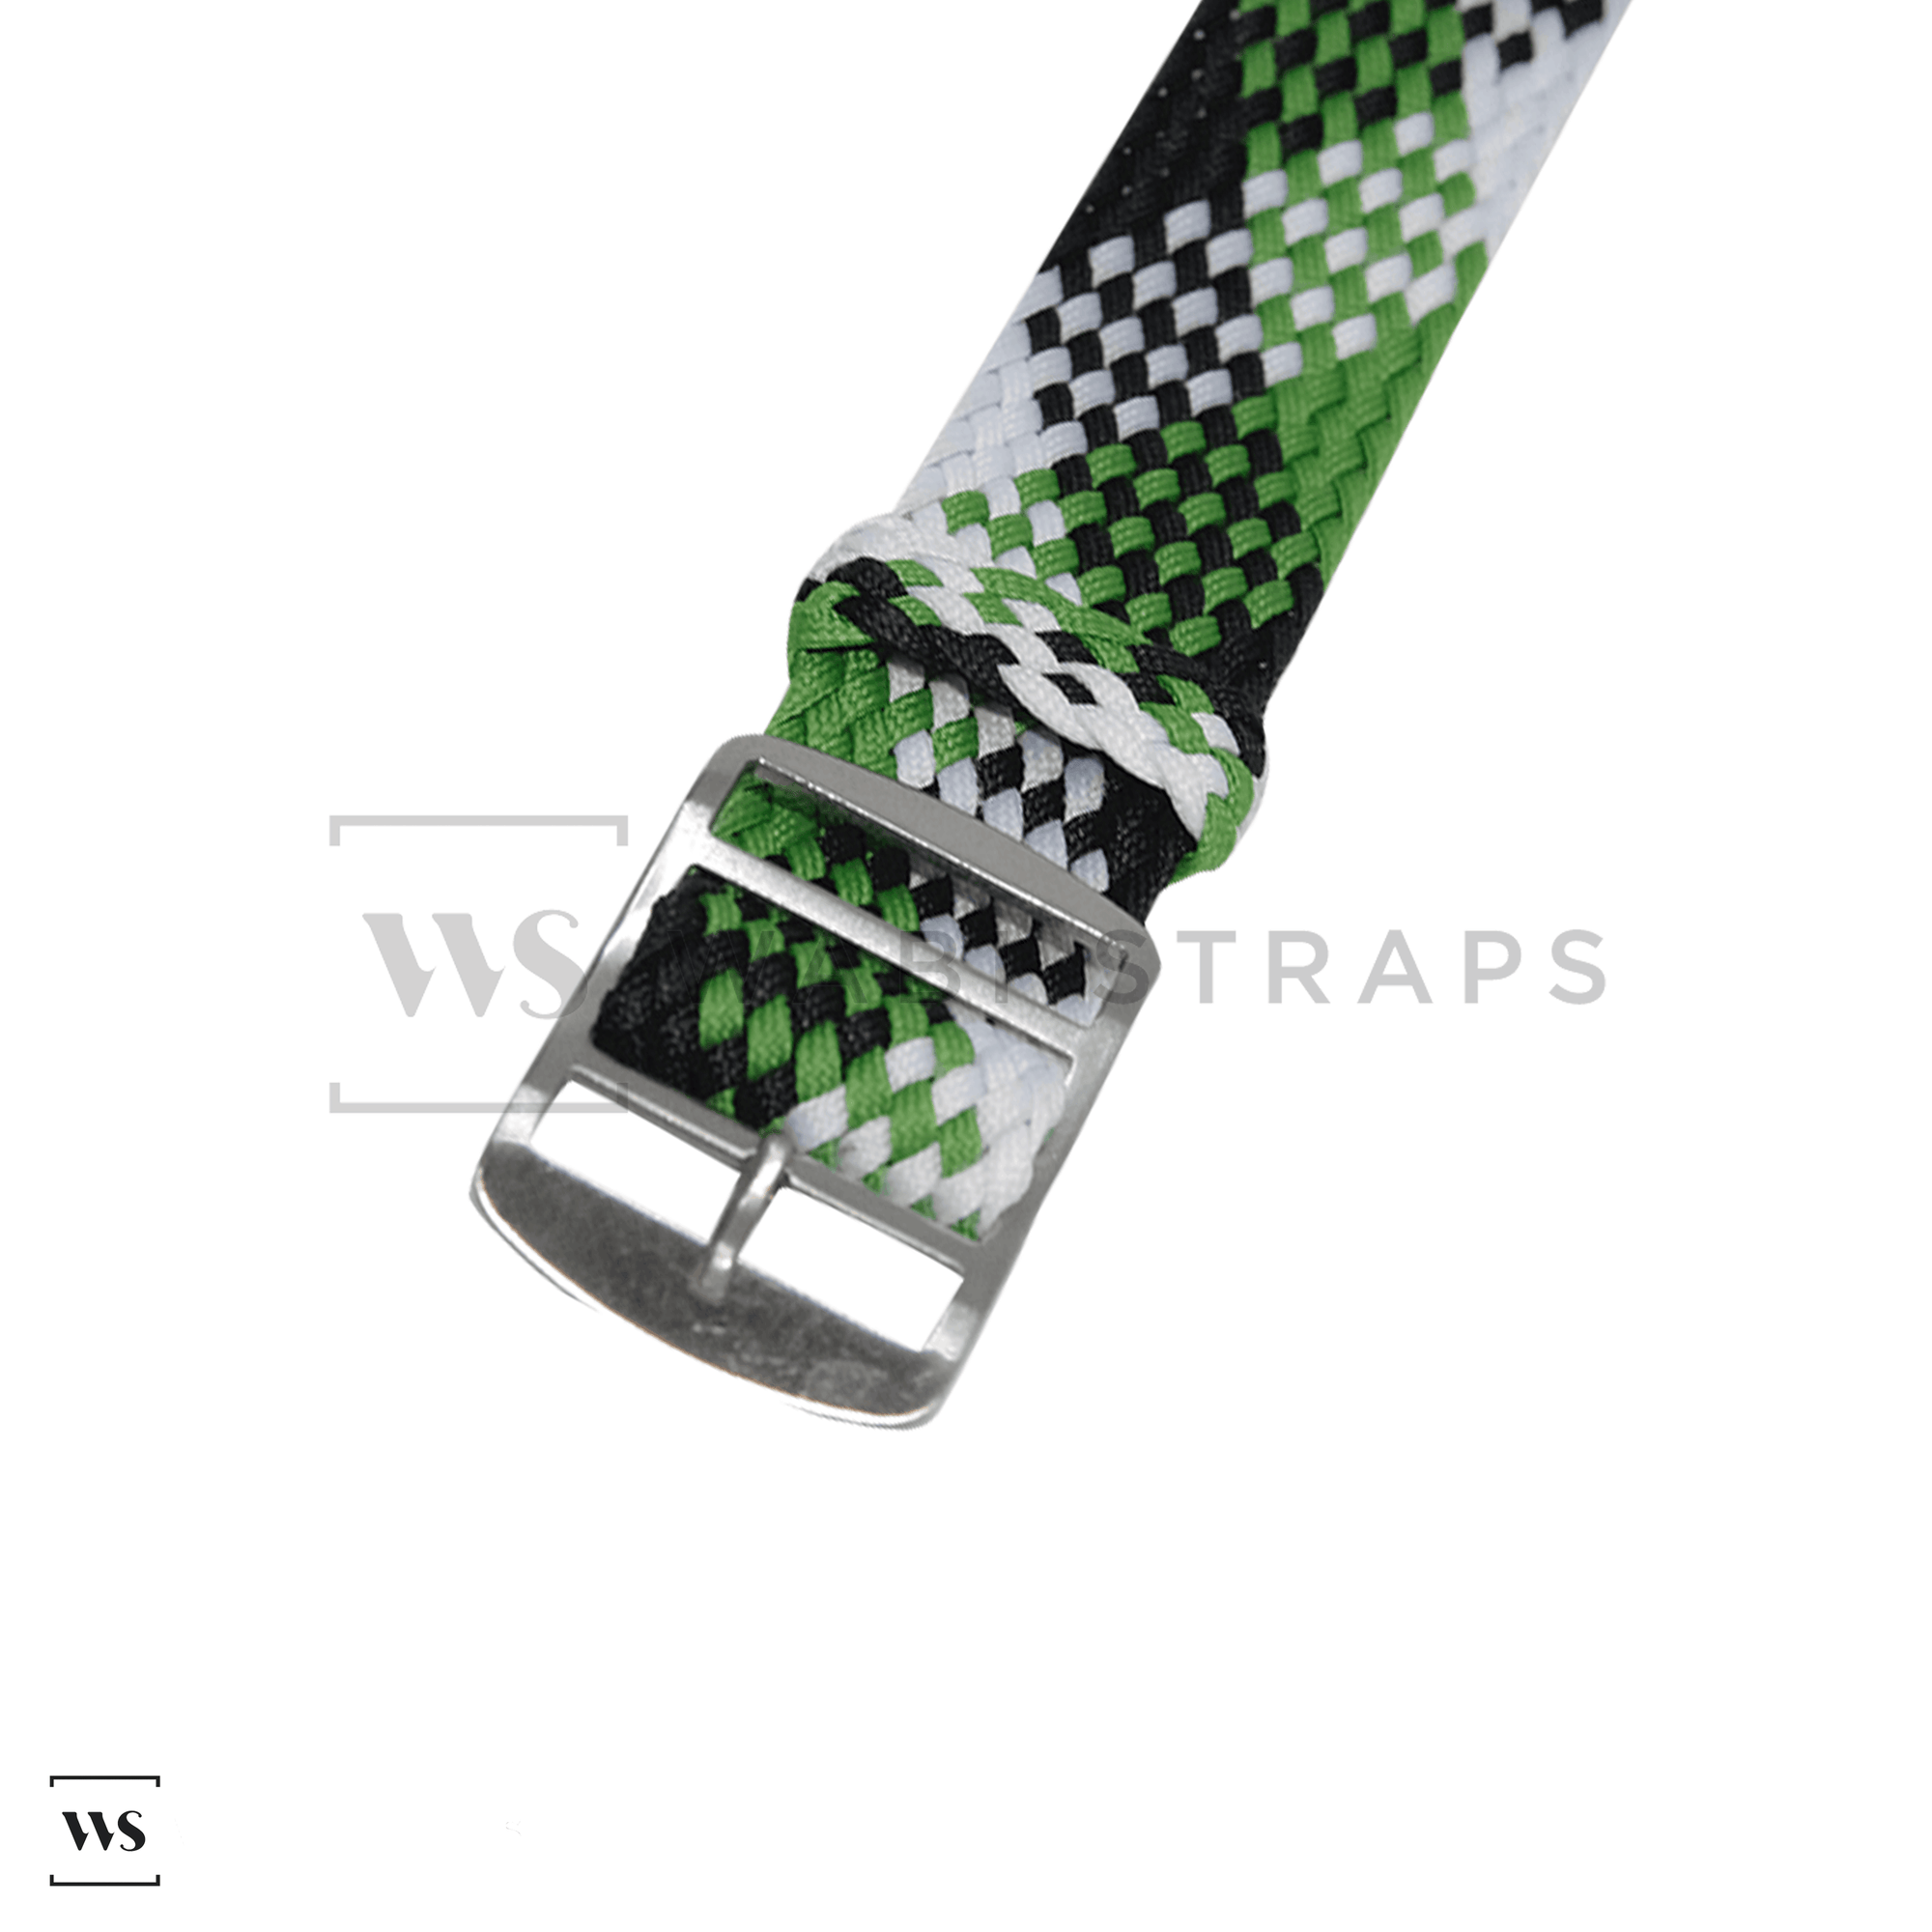 Green, Black & White Braided Perlon Strap Round